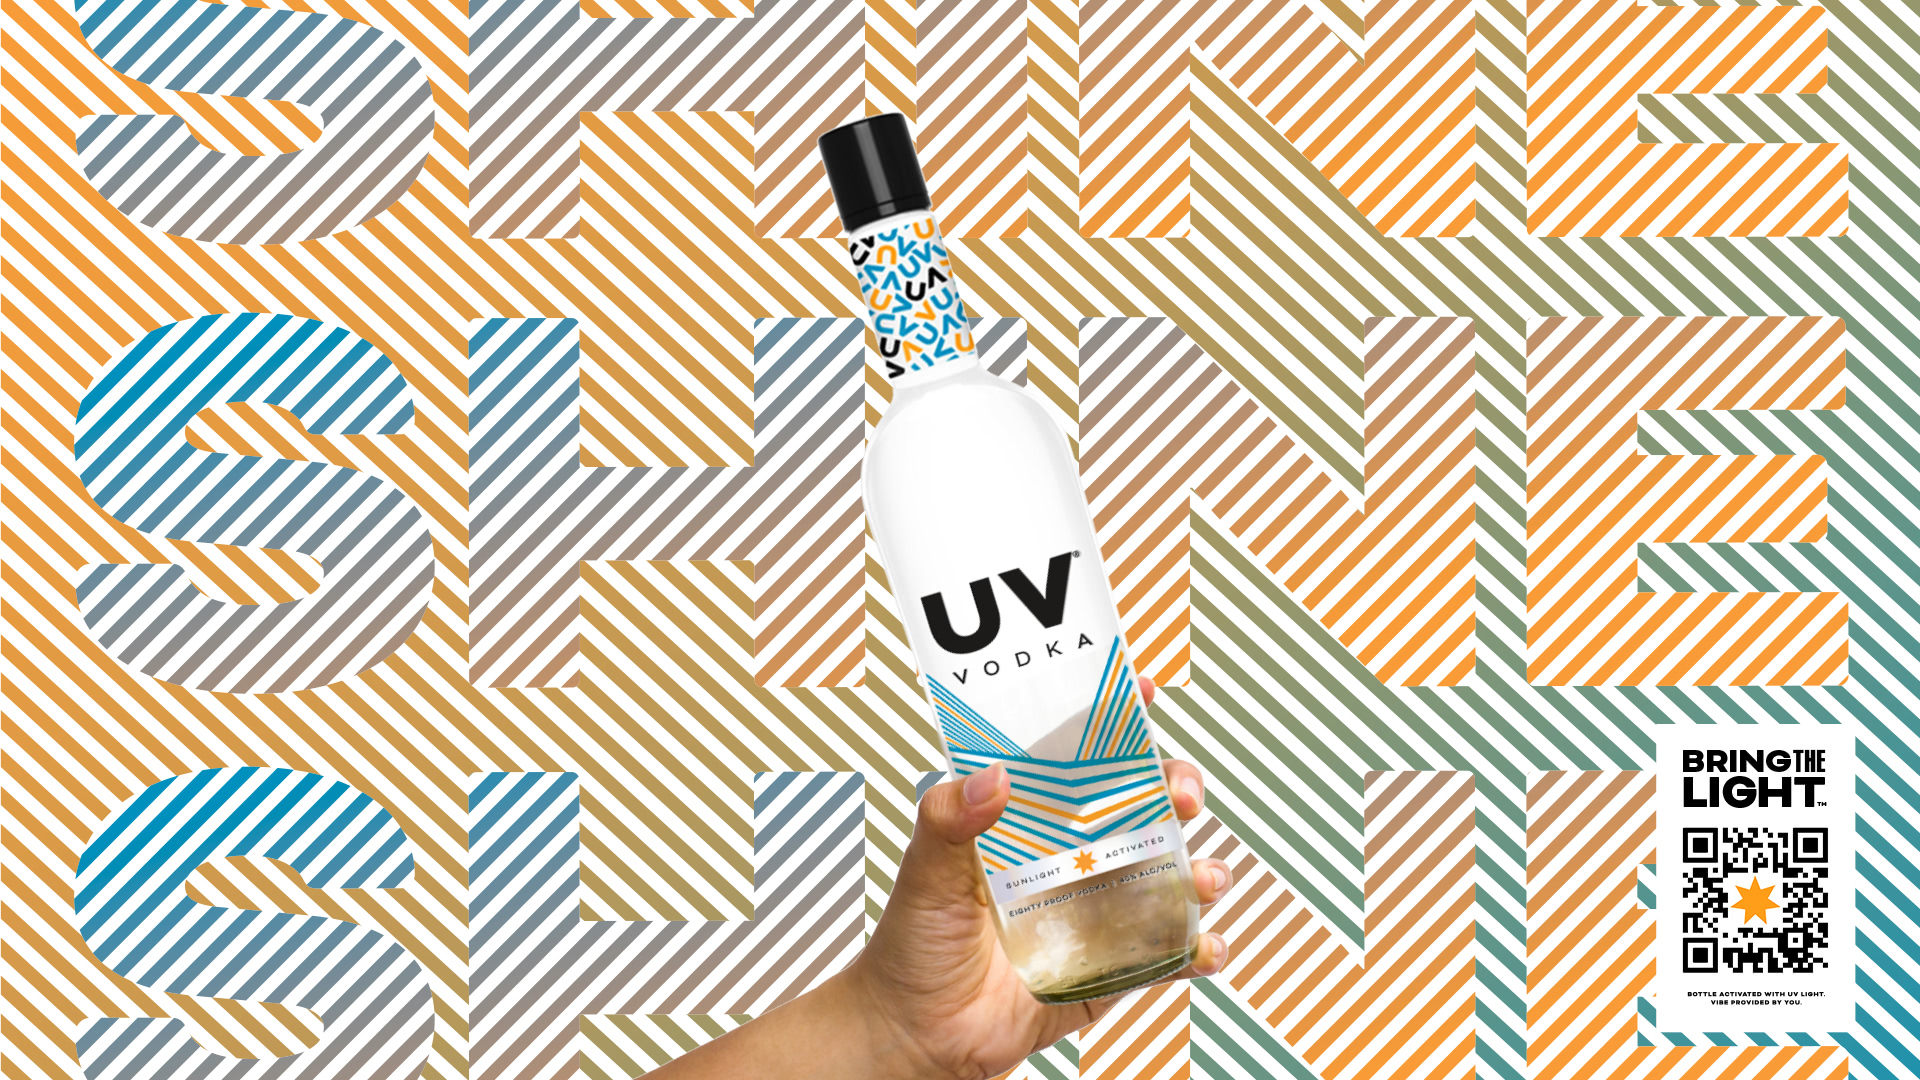 A bottle of UV Vodka on a lined background